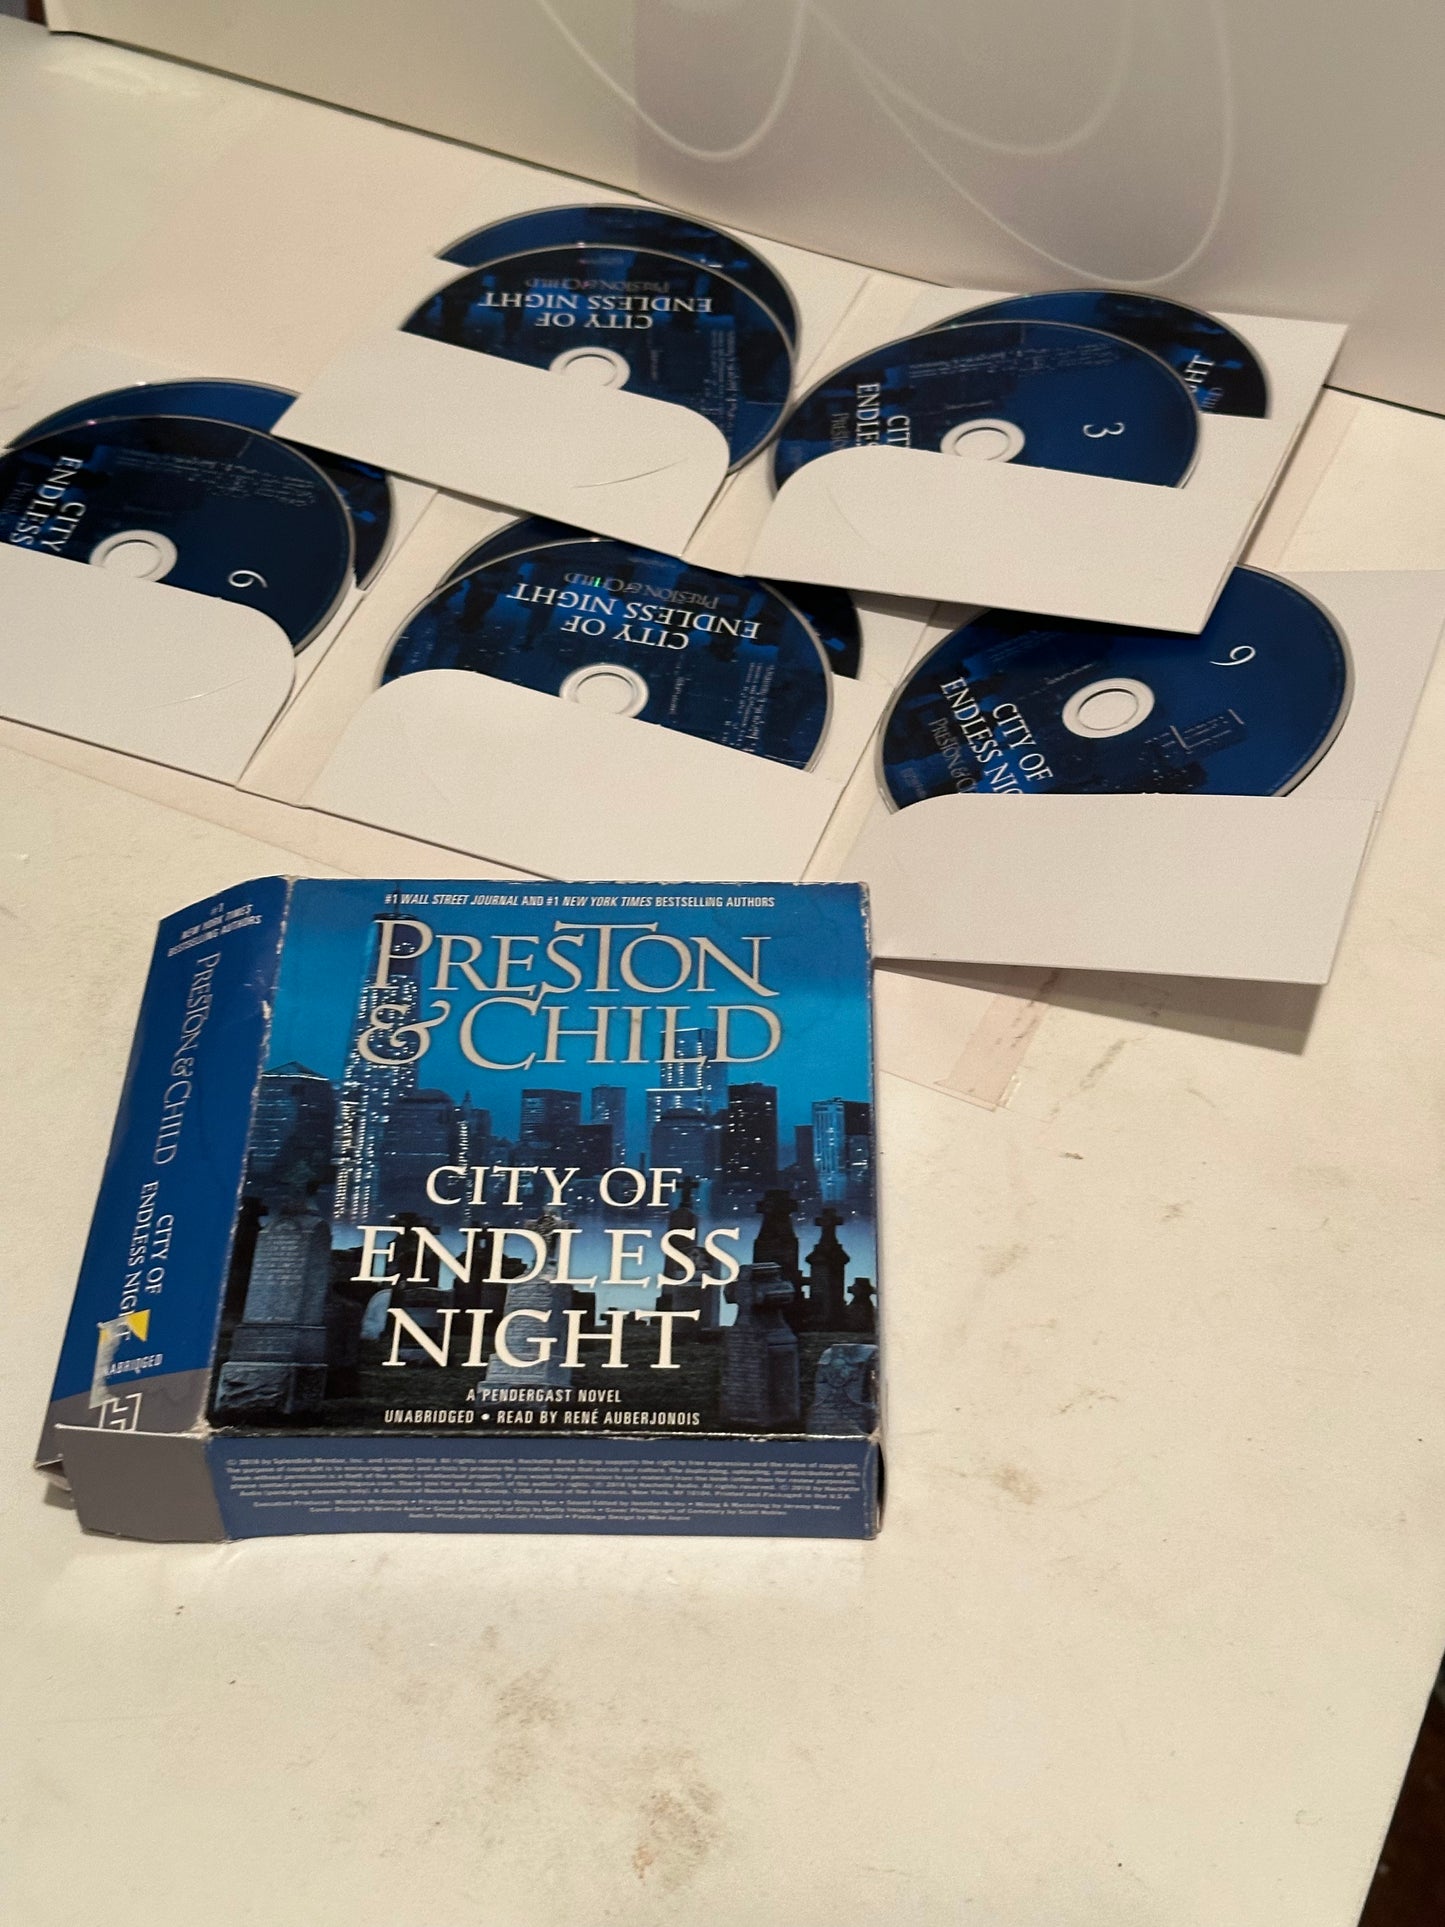 City of Endless Knight by Preston & Child